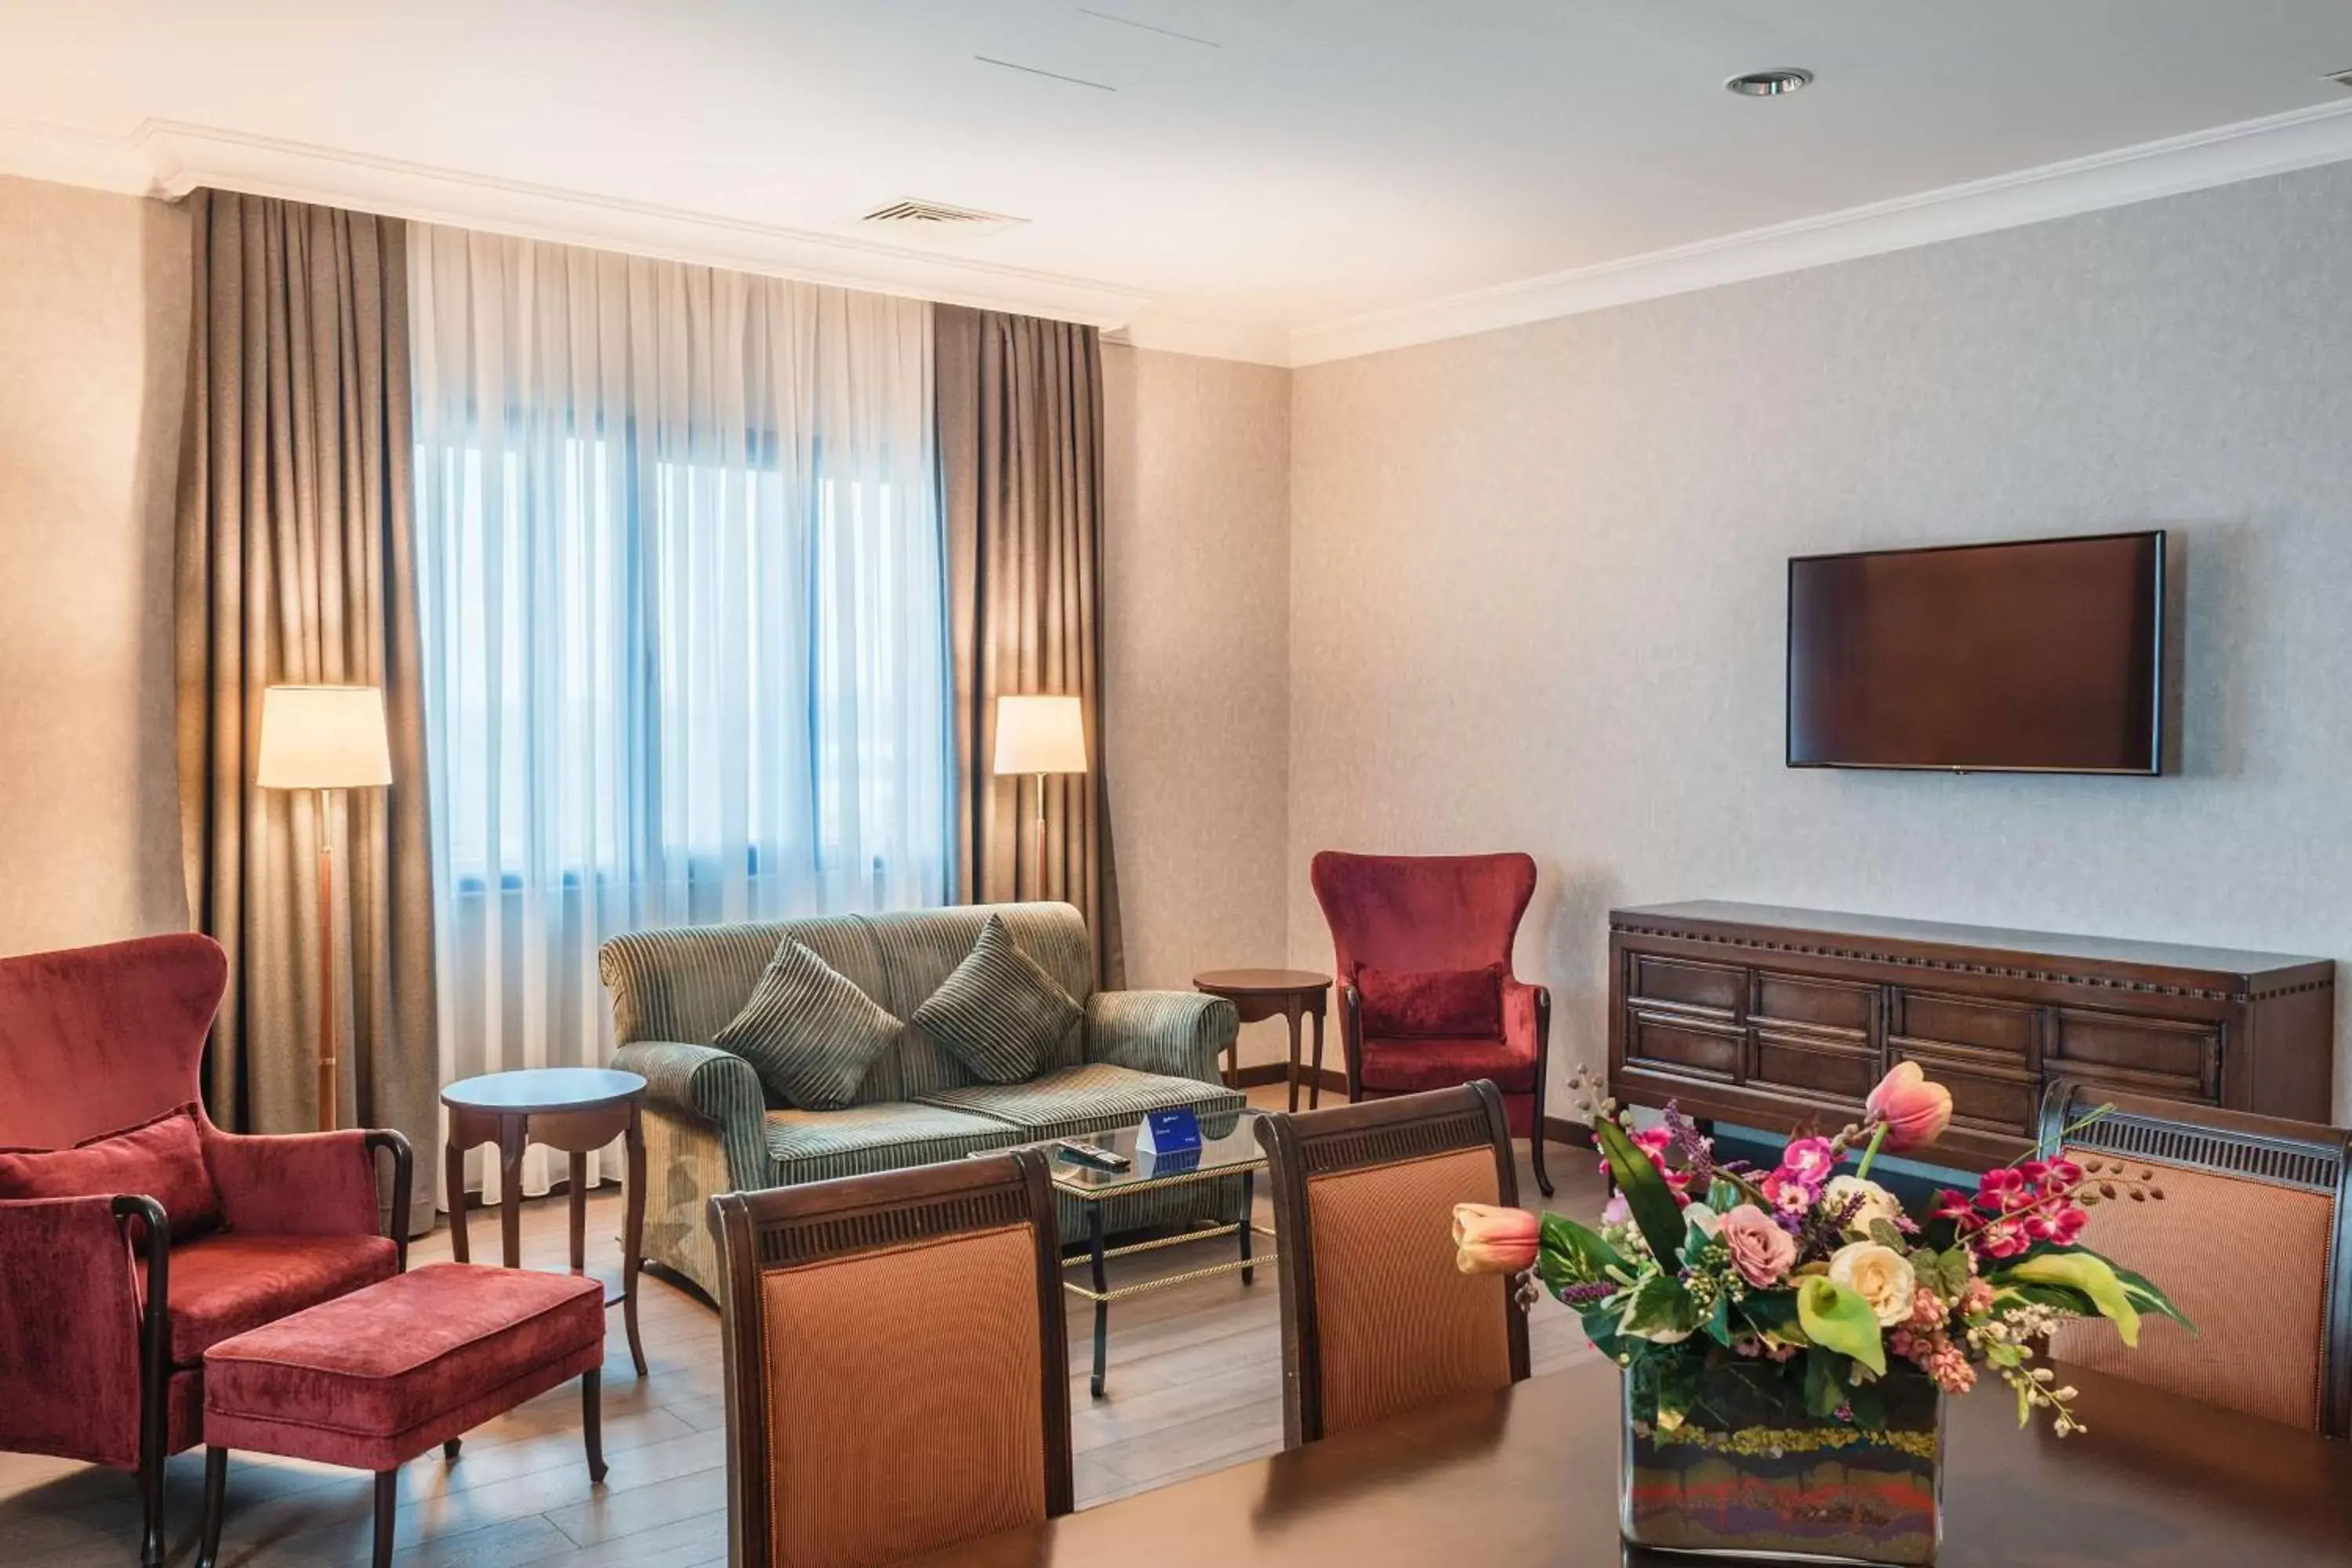 Photo of the whole room, Seating Area in Radisson Blu Hotel, Tashkent